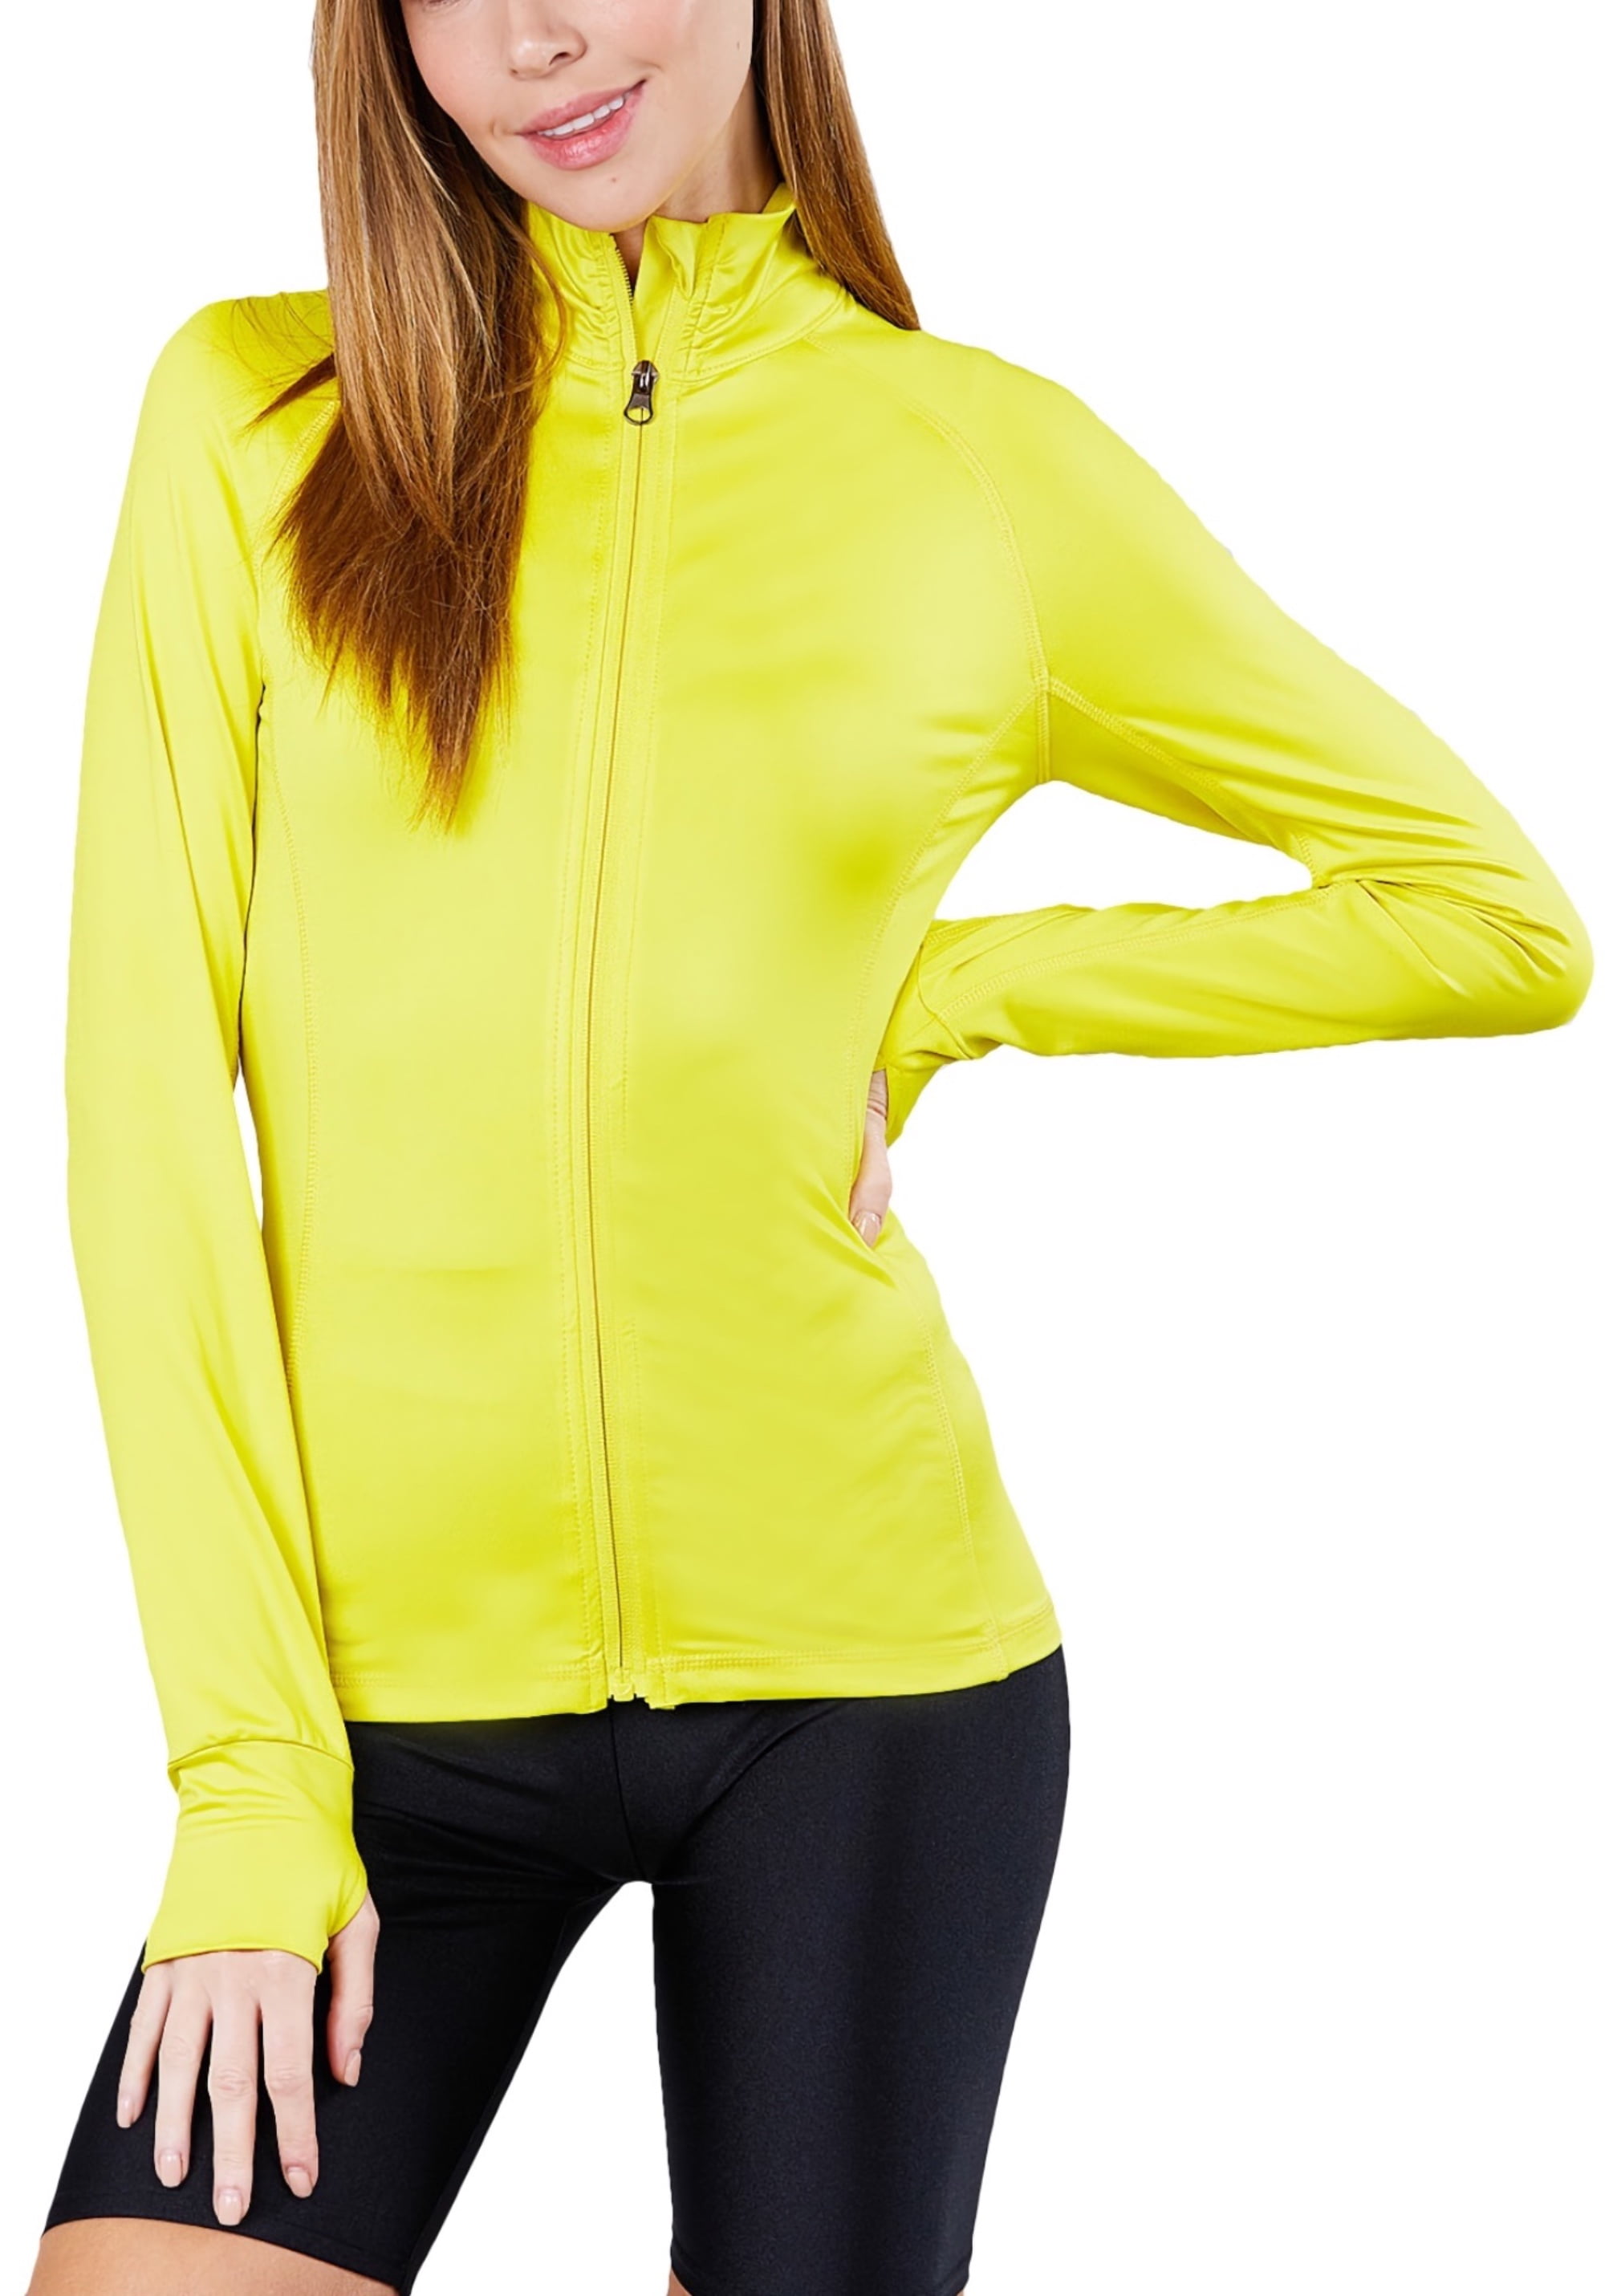 Women’s Running Jacket Slim Fit Lightweight Long Sleeve Full Zip Workout Yoga Jackets Athletic Track Jacket